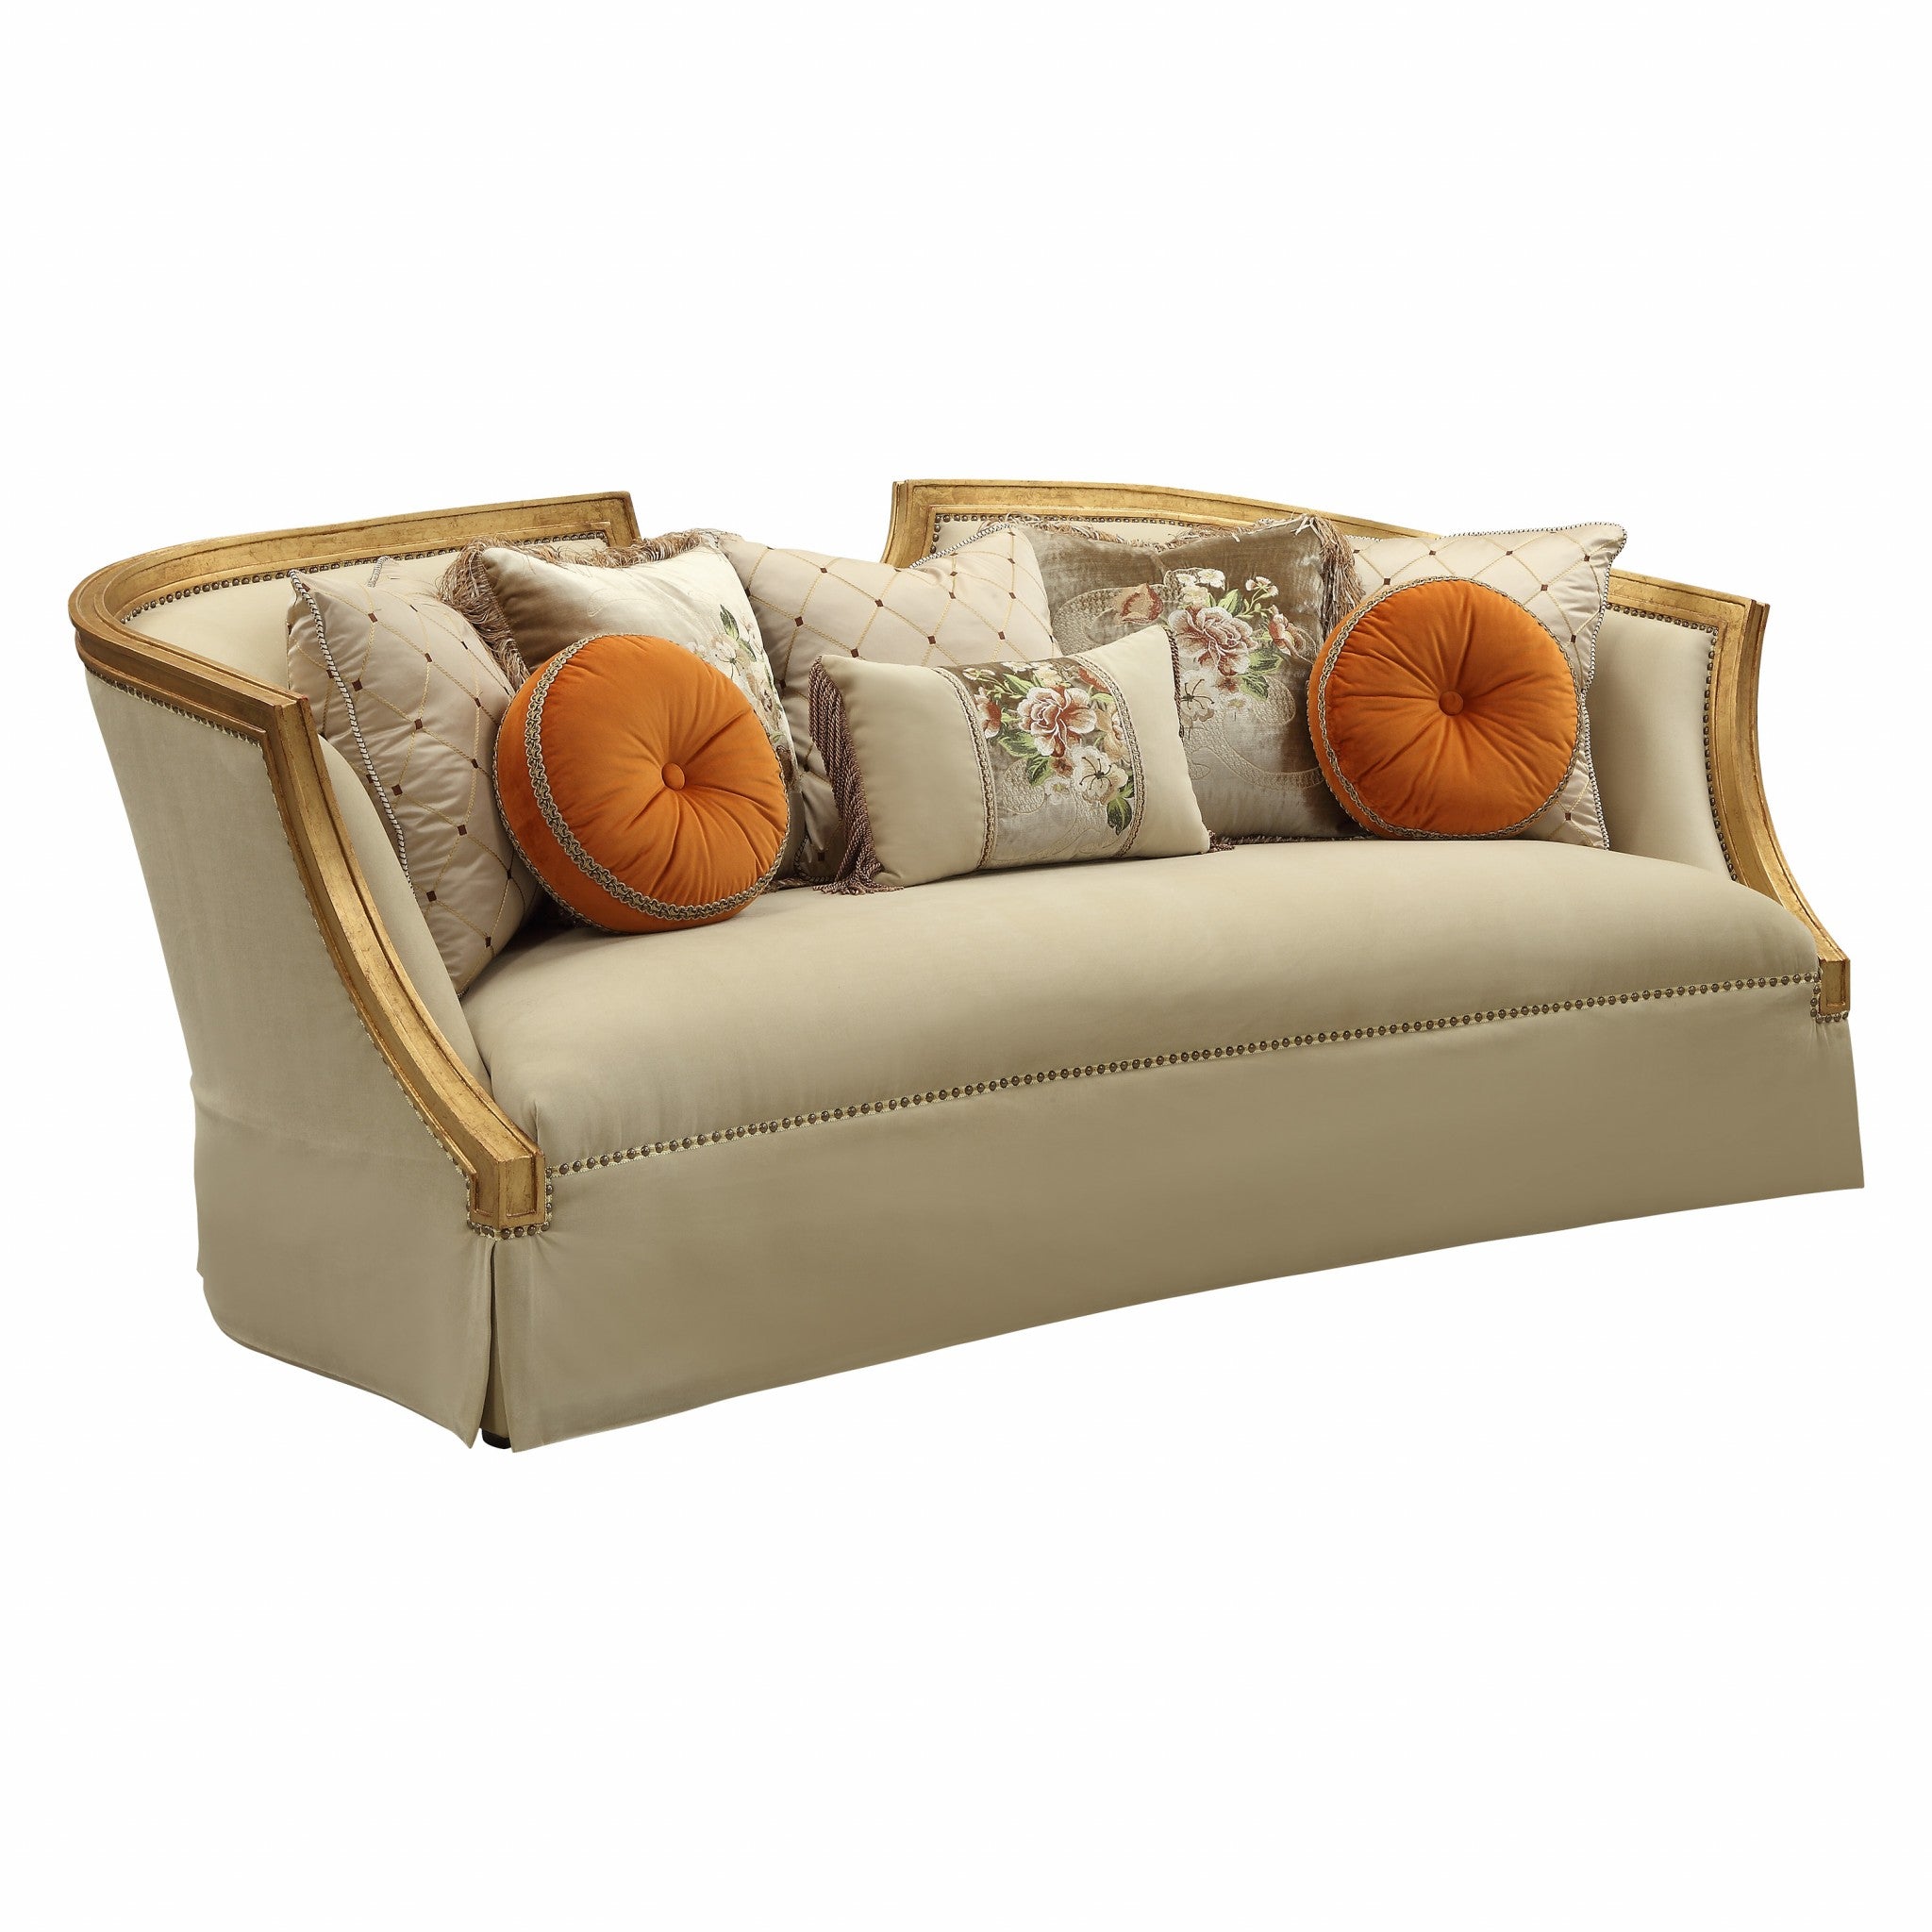 41" X 92" X 38" Fabric Antique Gold Upholstery Wood LegTrim Sofa w8 Pillows